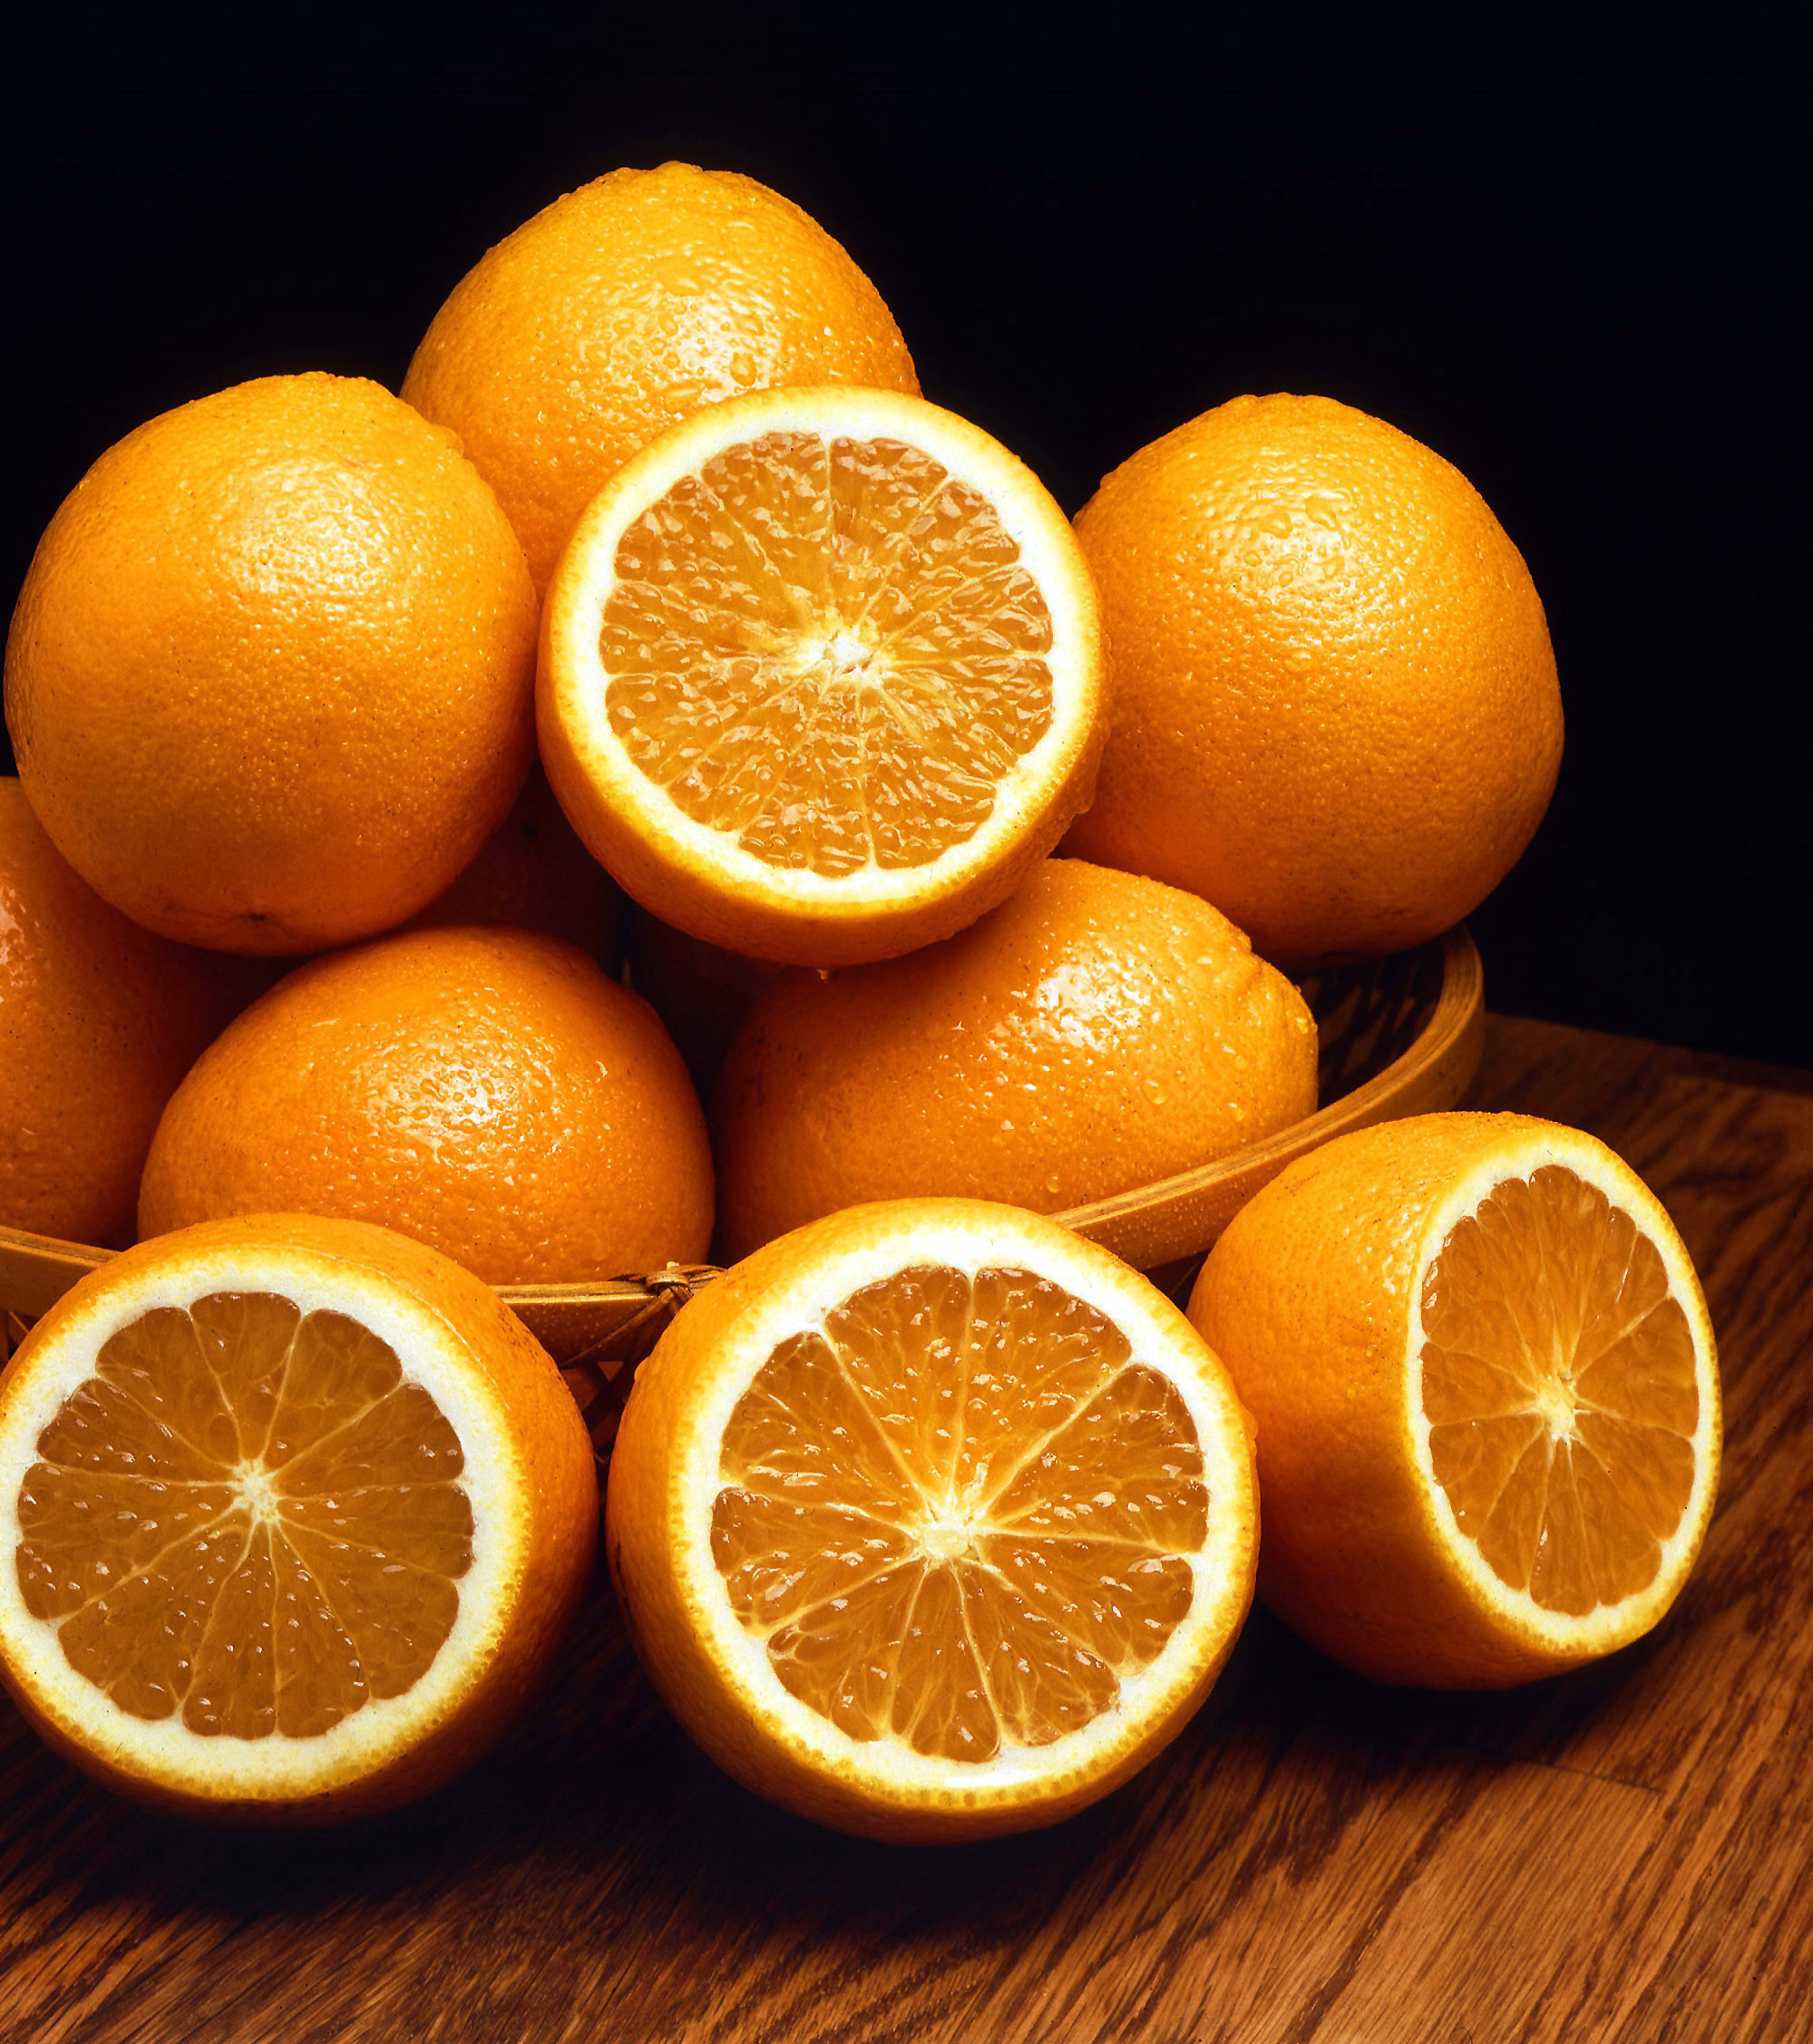 File:Ambersweet oranges.jpg - Wikimedia Commons